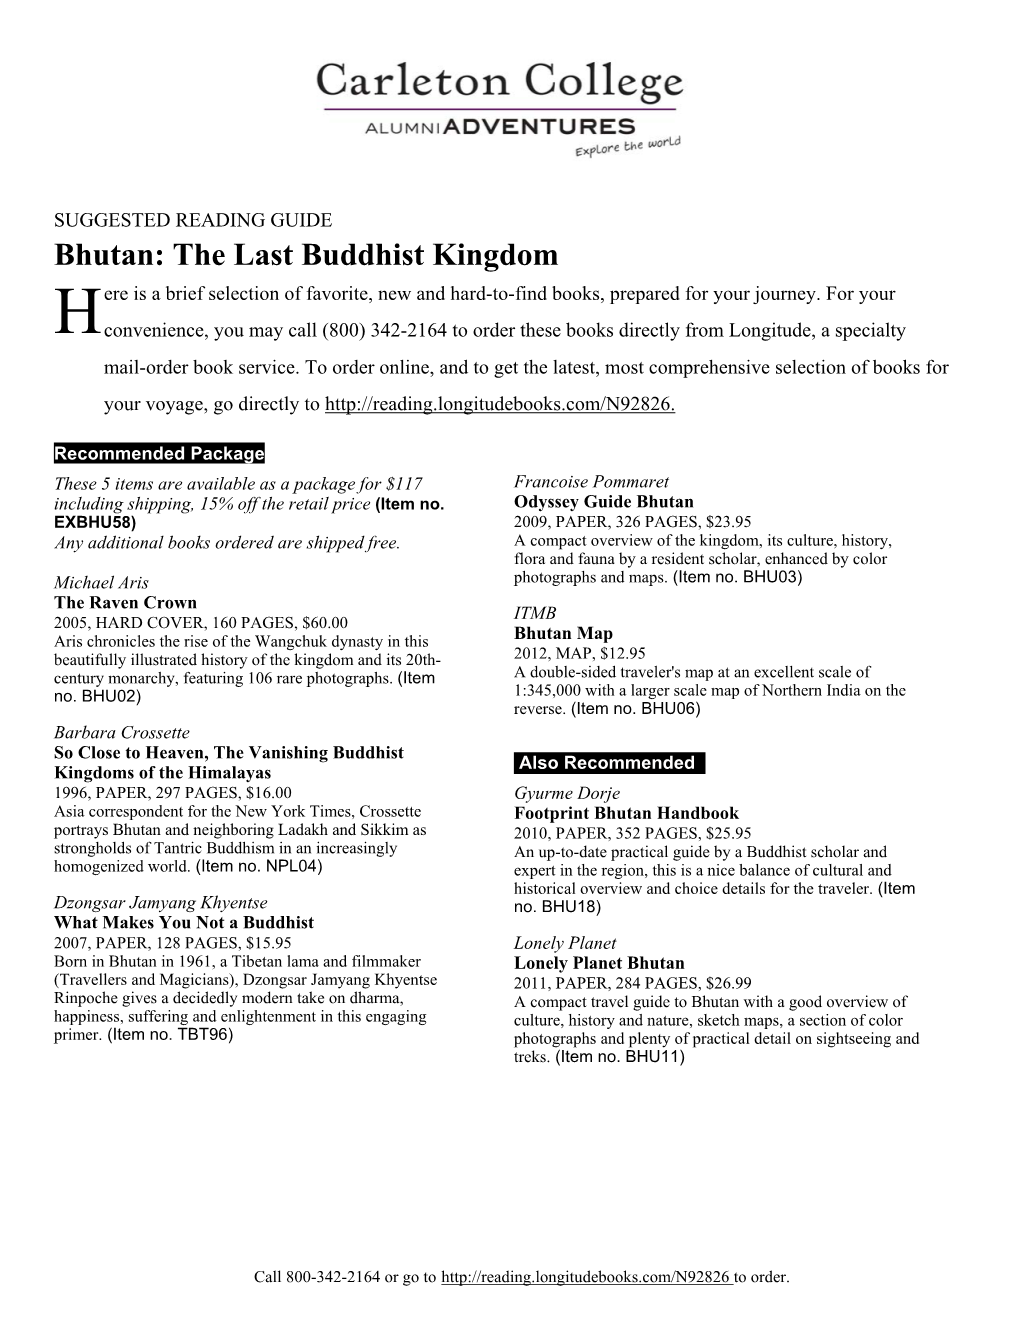 READING GUIDE Bhutan: the Last Buddhist Kingdom